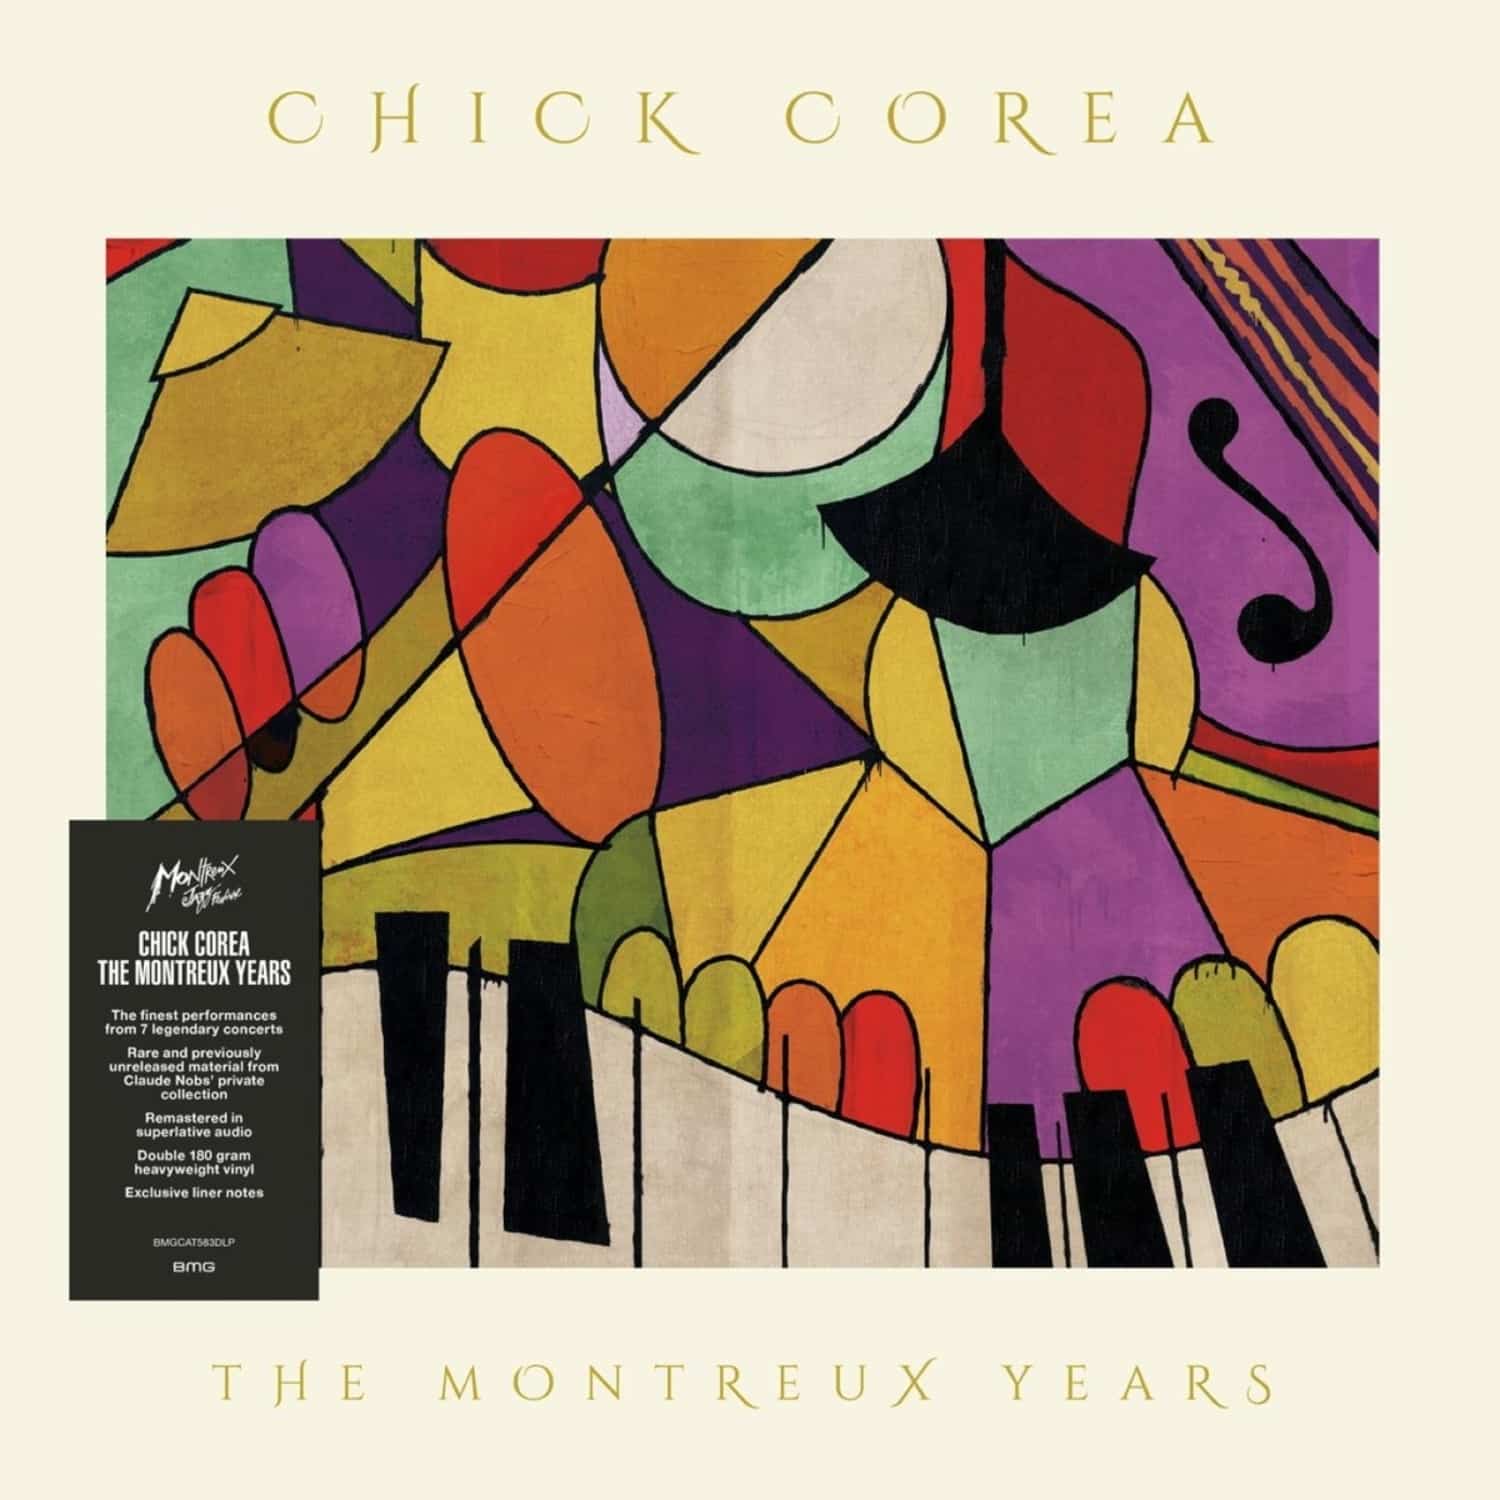 Chick Corea - CHICK COREA:THE MONTREUX YEARS 